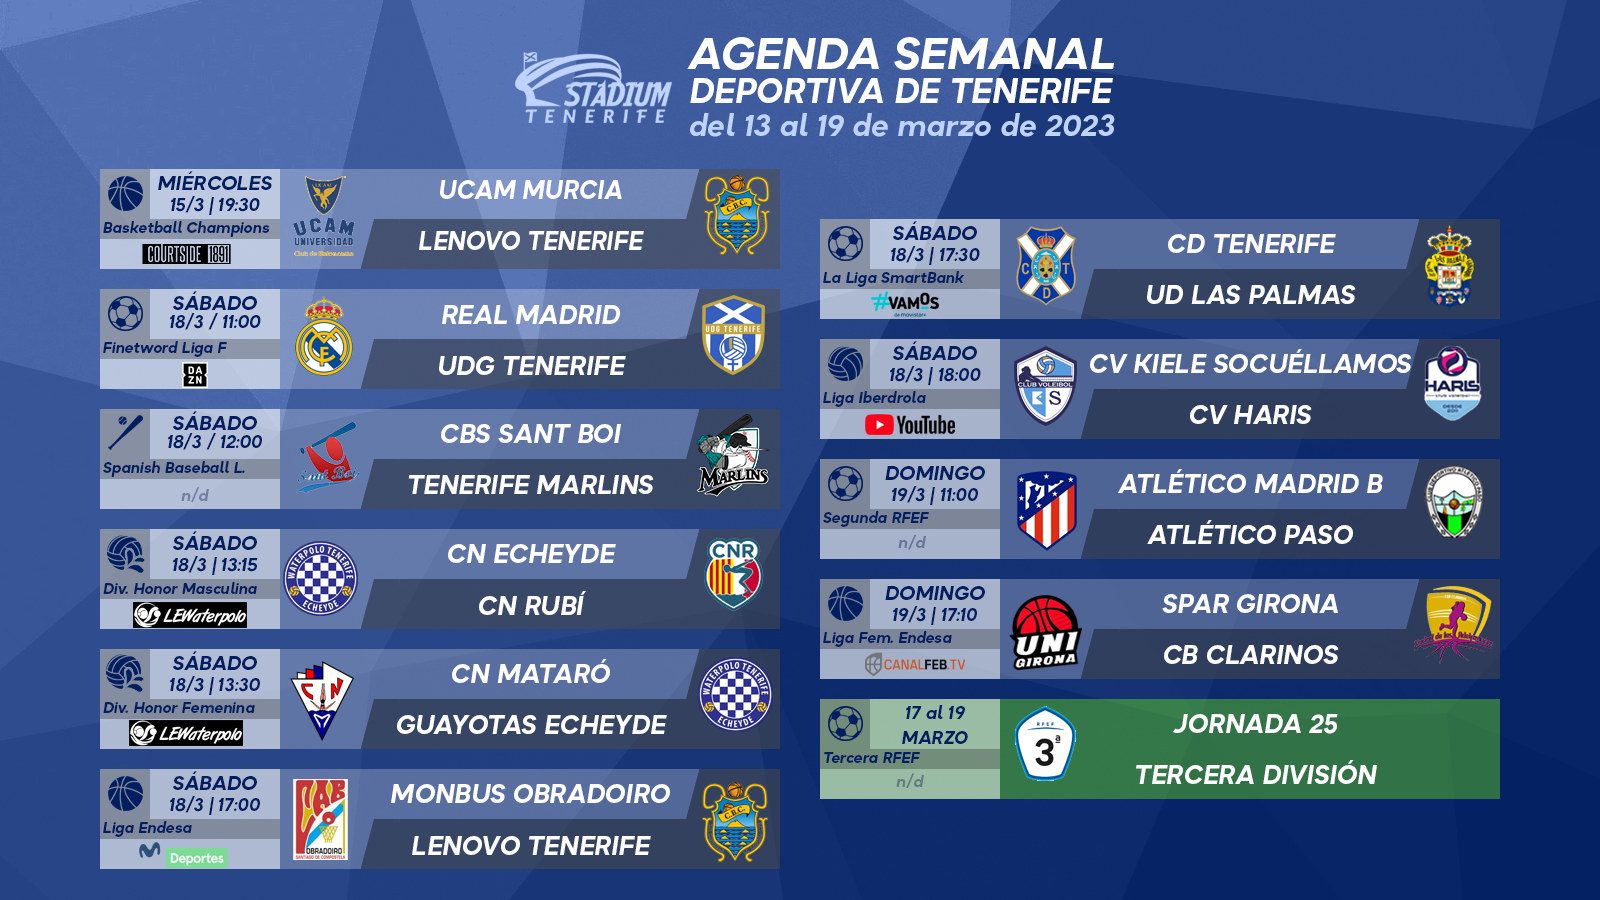 Agenda Semanal Deportiva de Tenerife (13 al 19 de marzo)